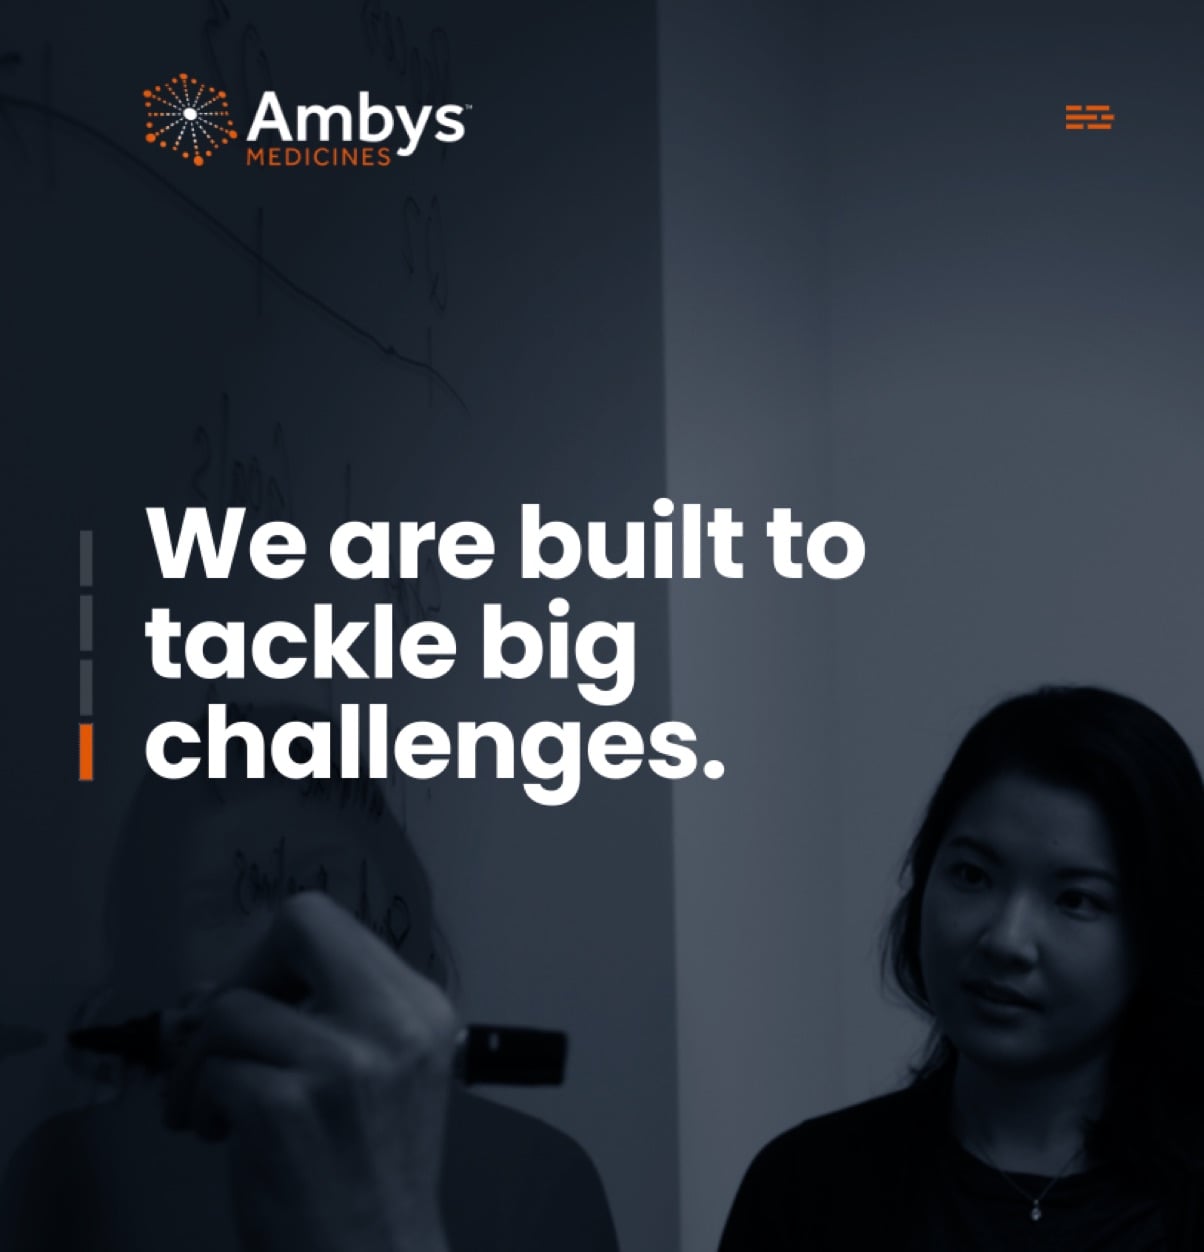 Ambys website header: "We are built to tackle big challenges."